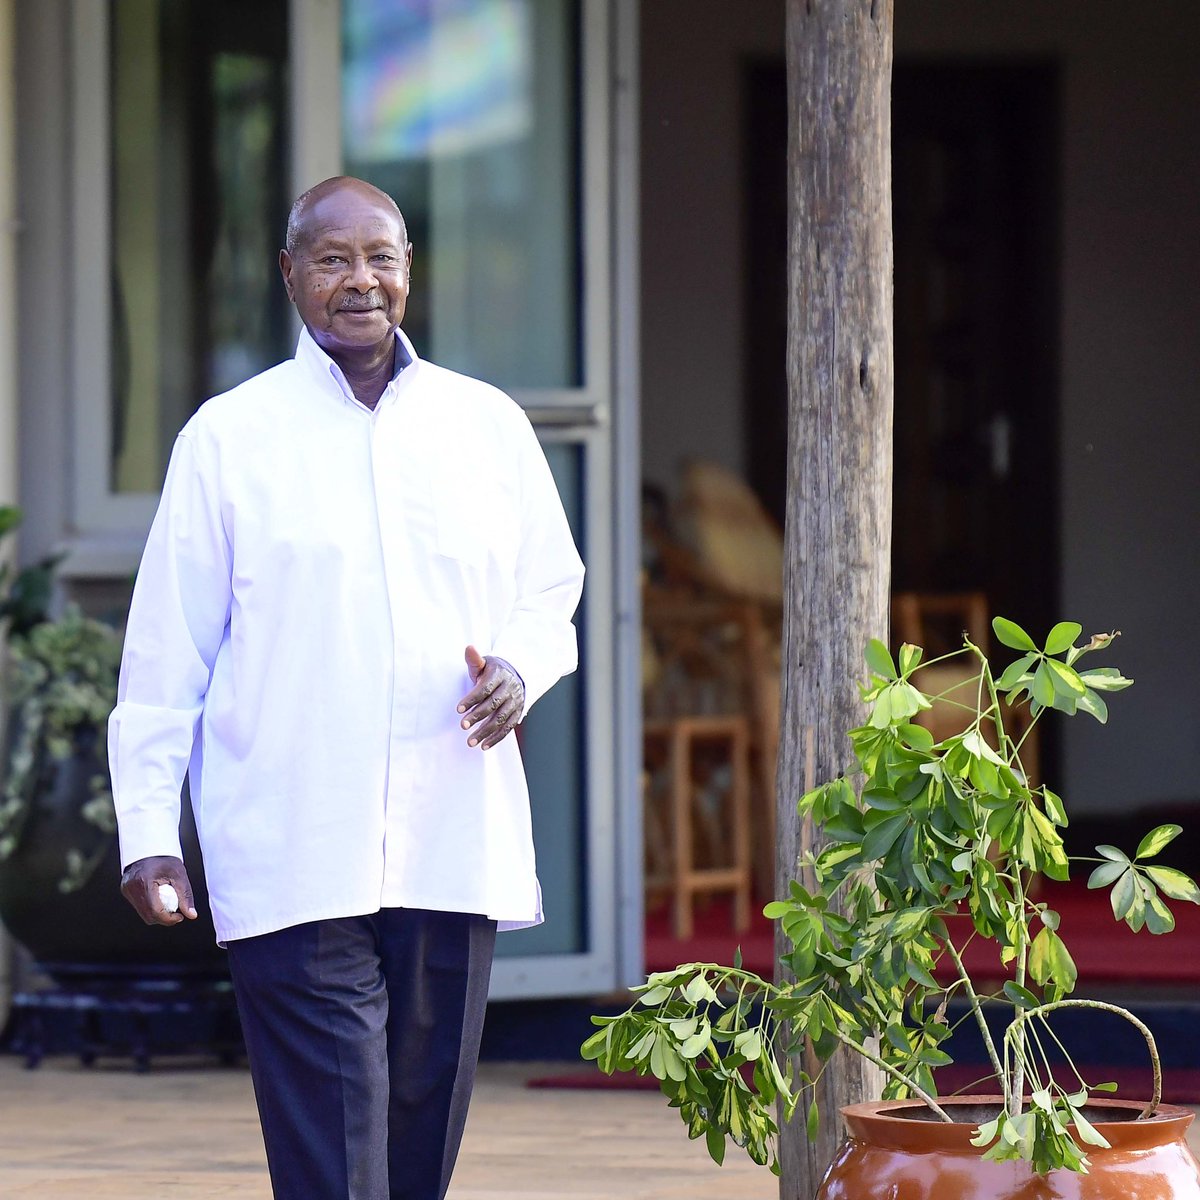 Ro001 - General of the Original NRA @KagutaMuseveni 👌🏾
#HeroesDay2023